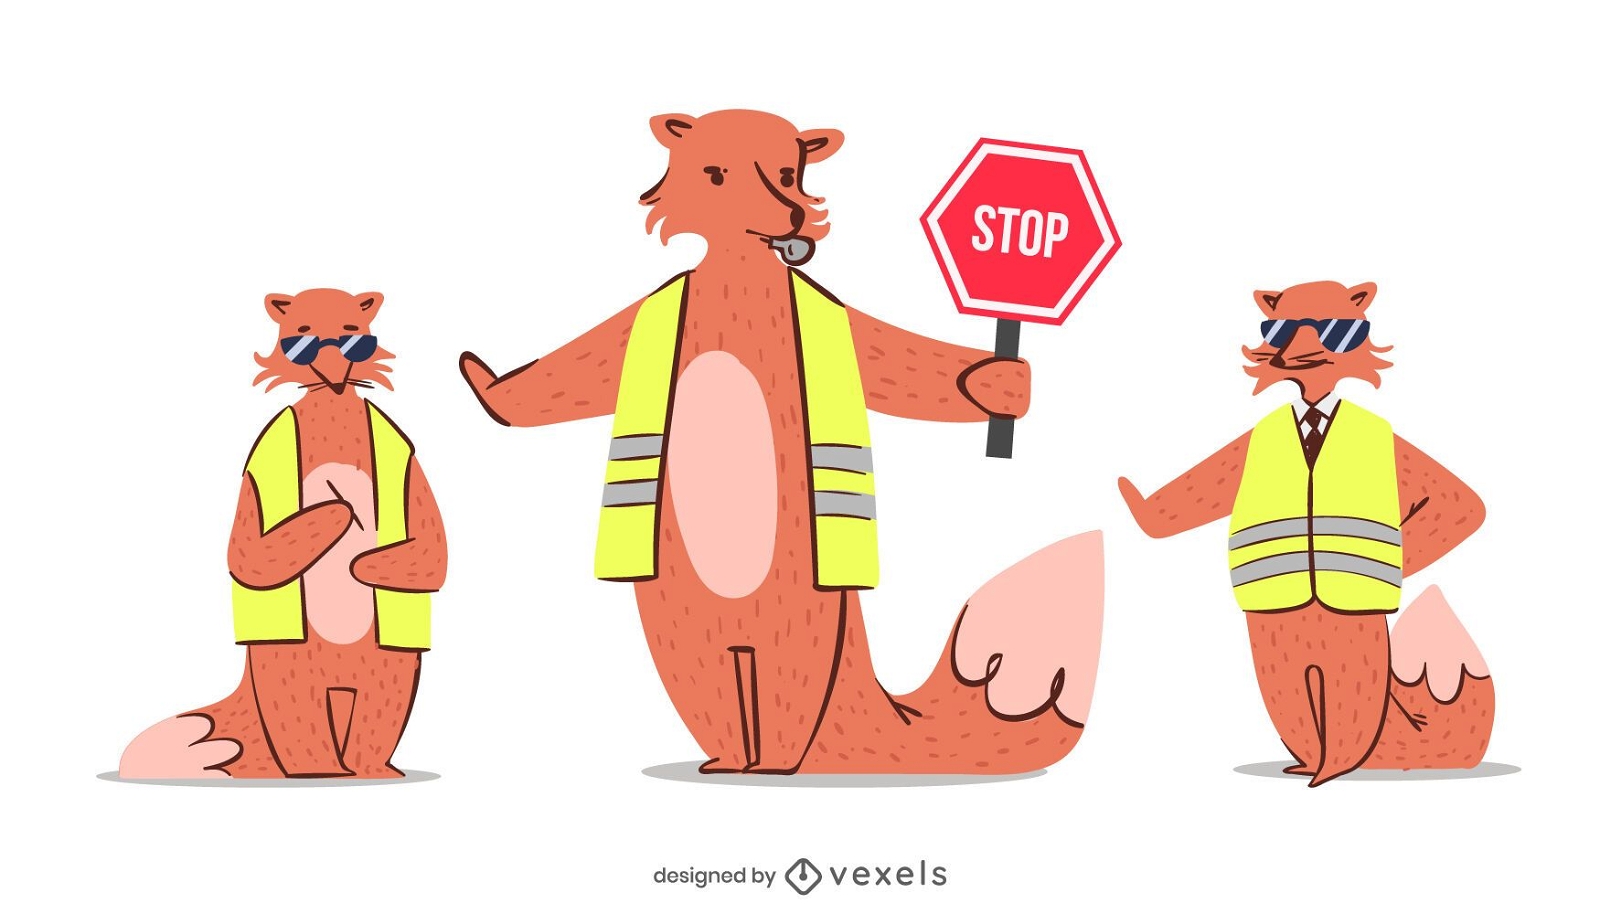 Fox traffic control character set design